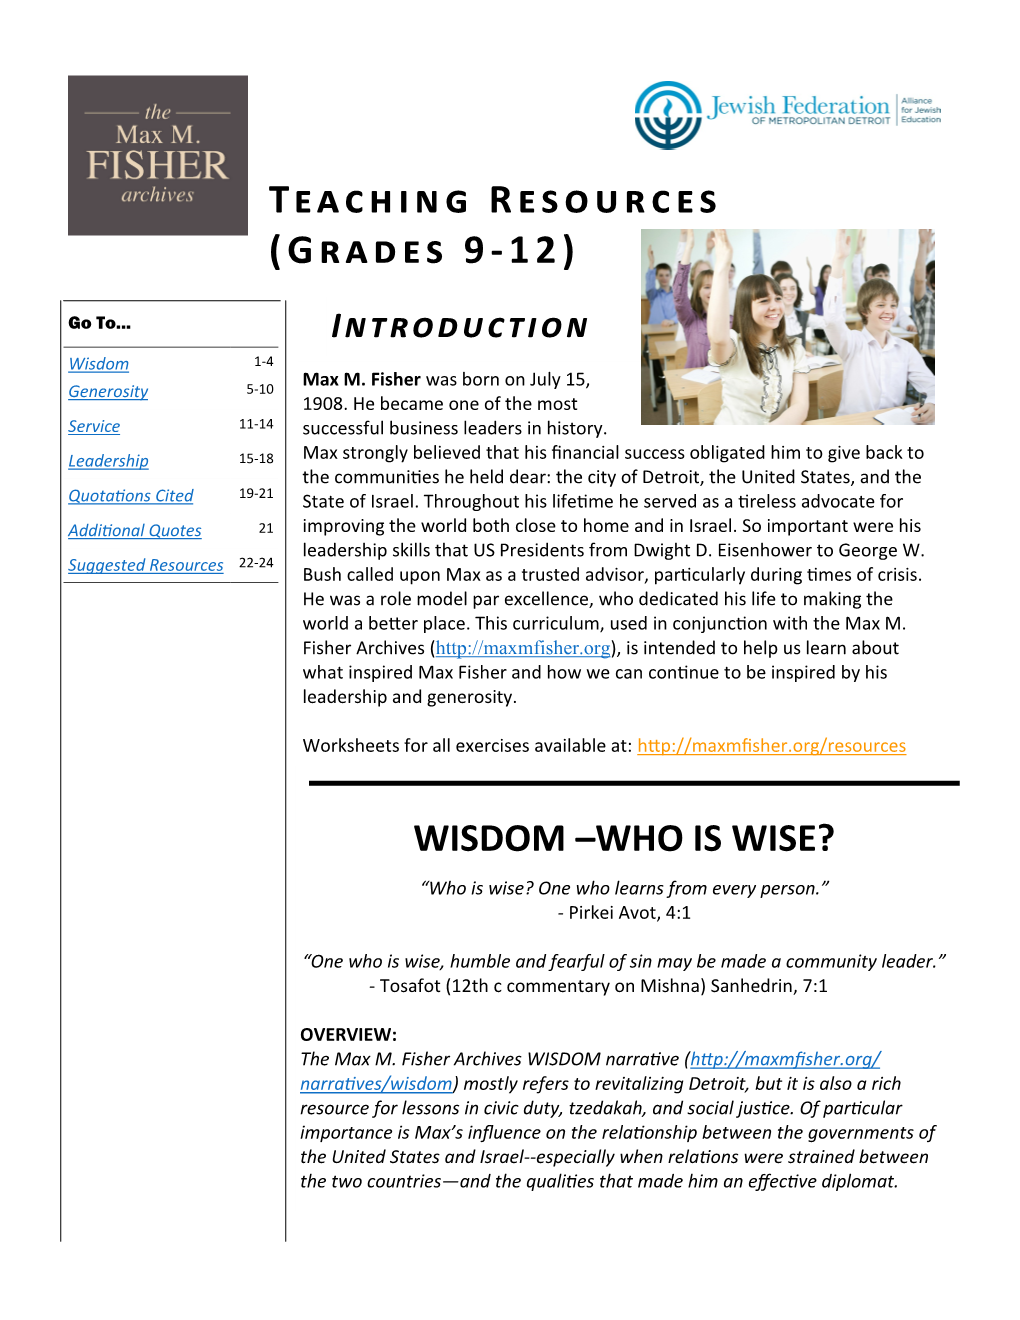 Teaching Resources (Grades 9-12)